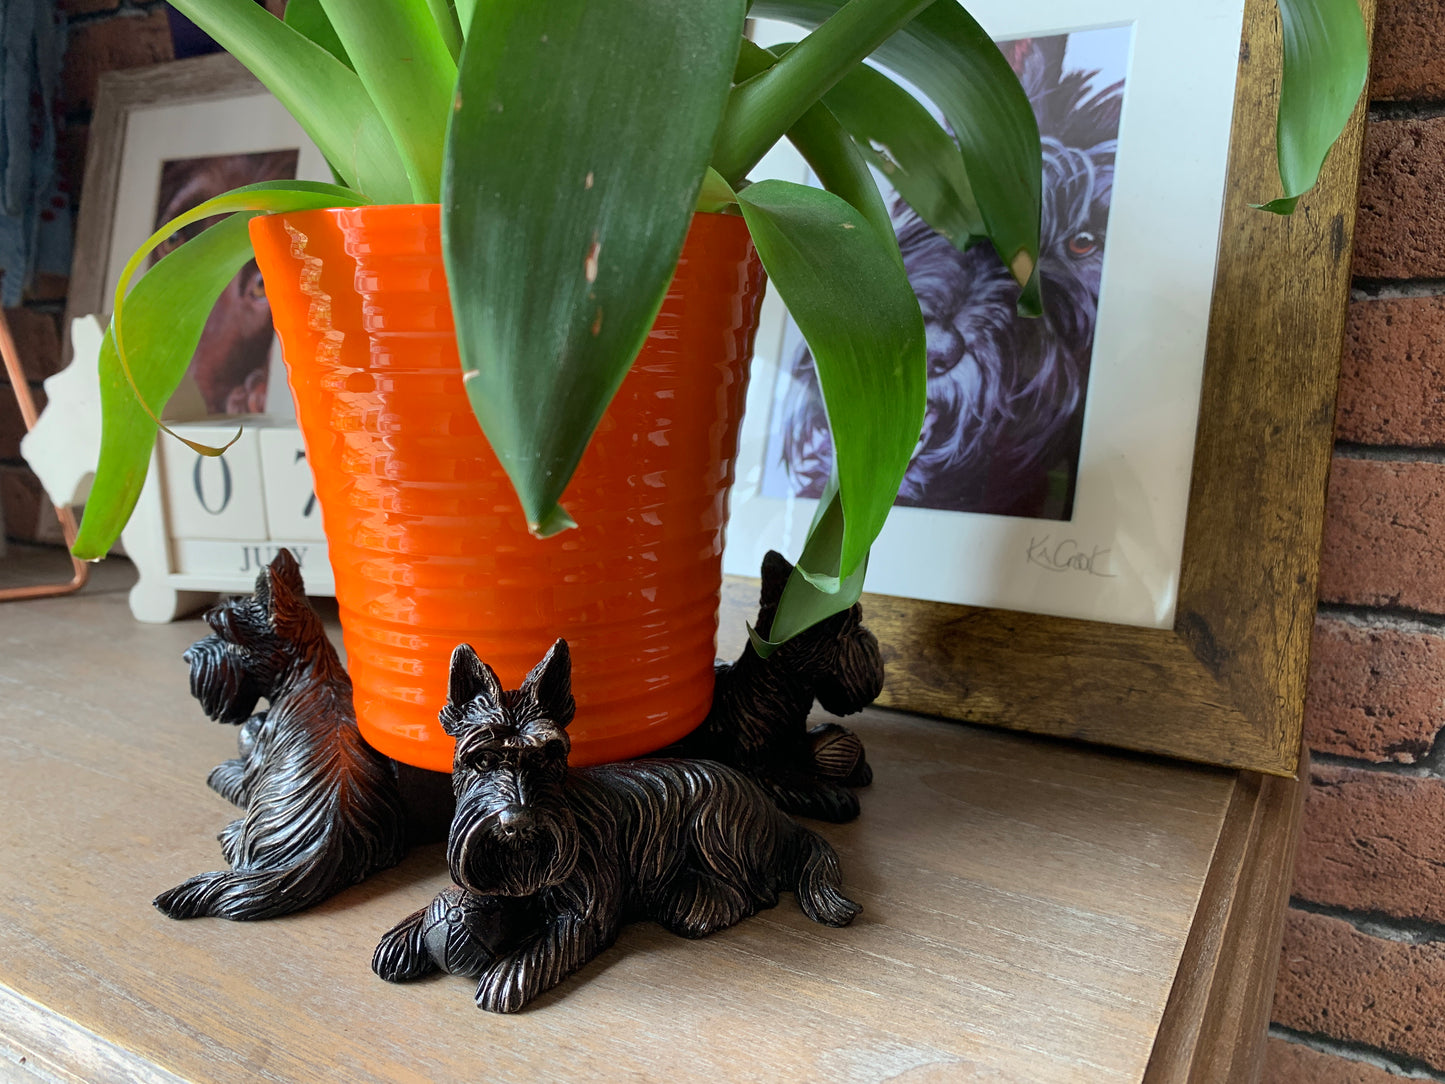 Scottish Terrier Plant Pot Feet (Bronze)